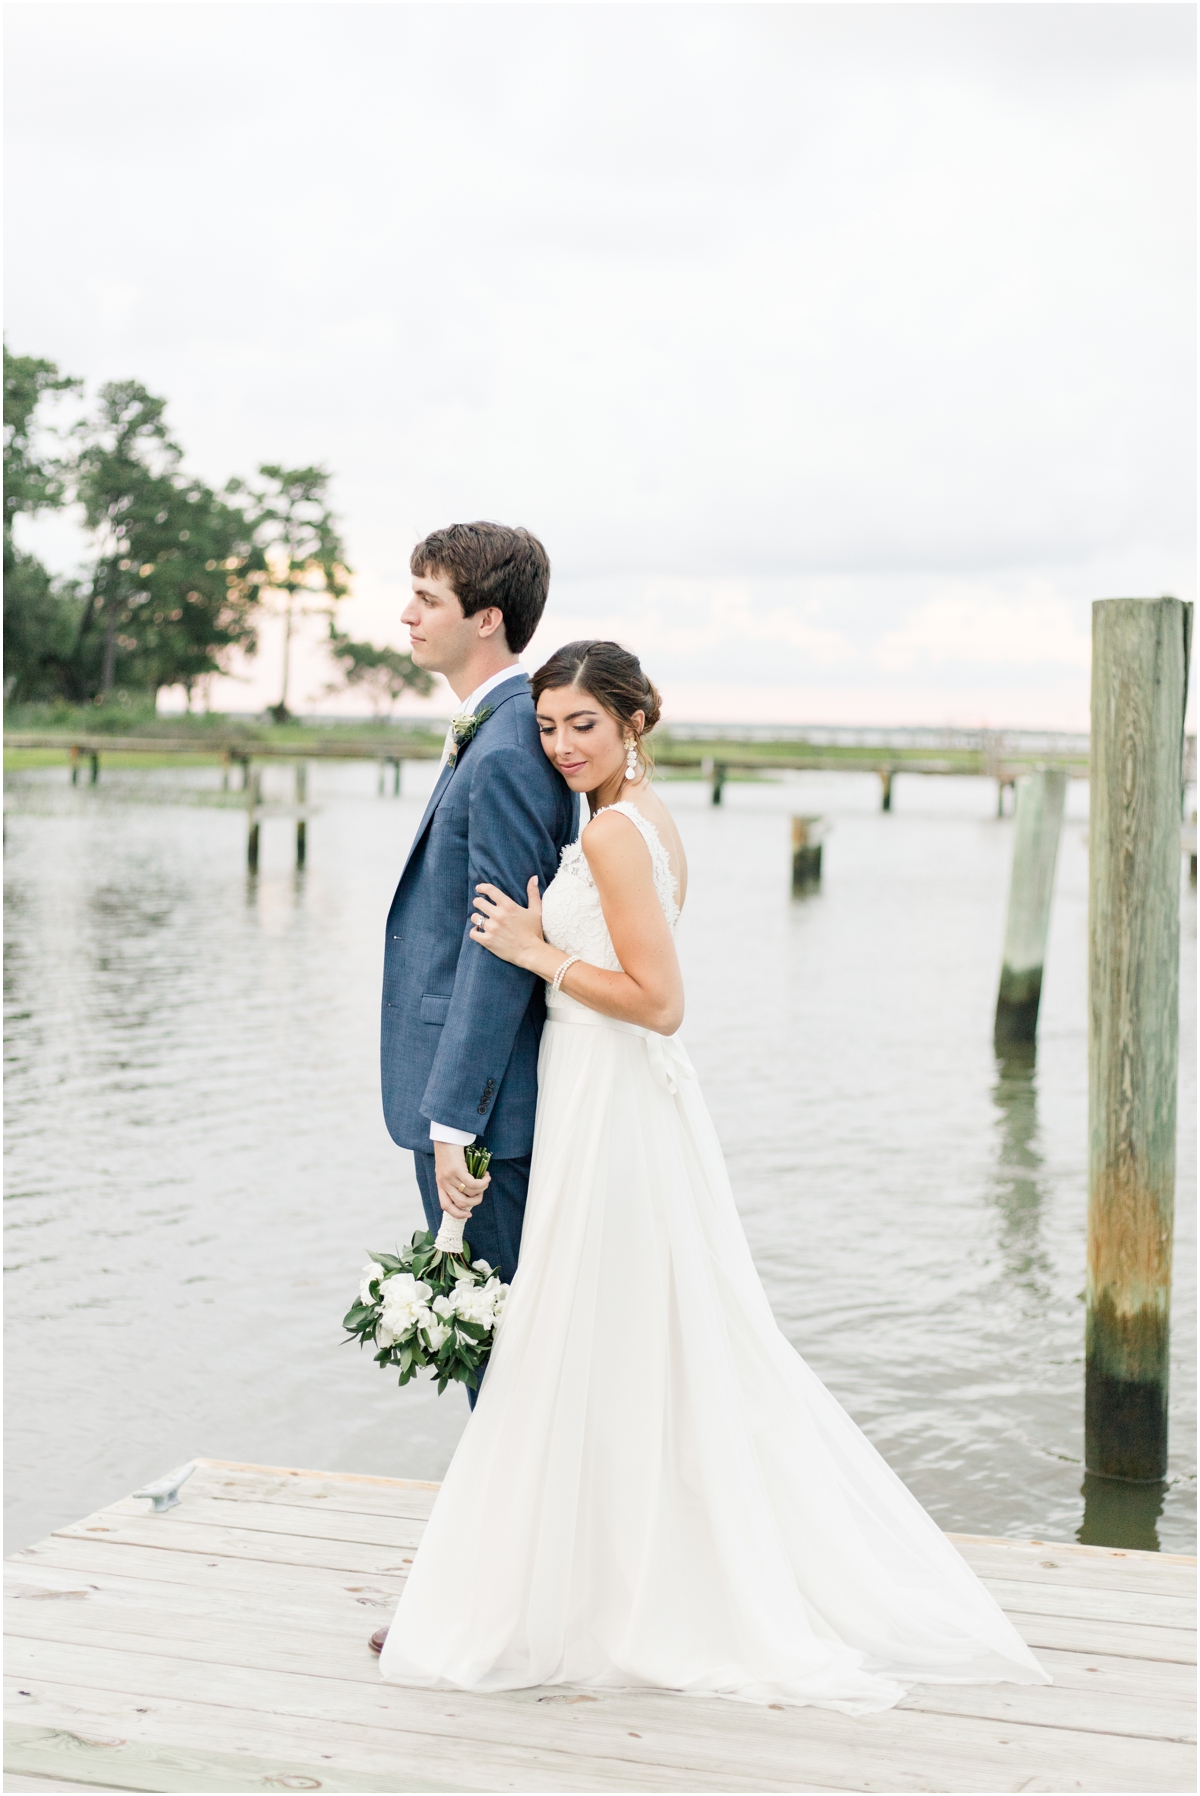 Coastal Lucy Creek Dockhouse Wedding in Beaufort, SC l Sprinkle Photography